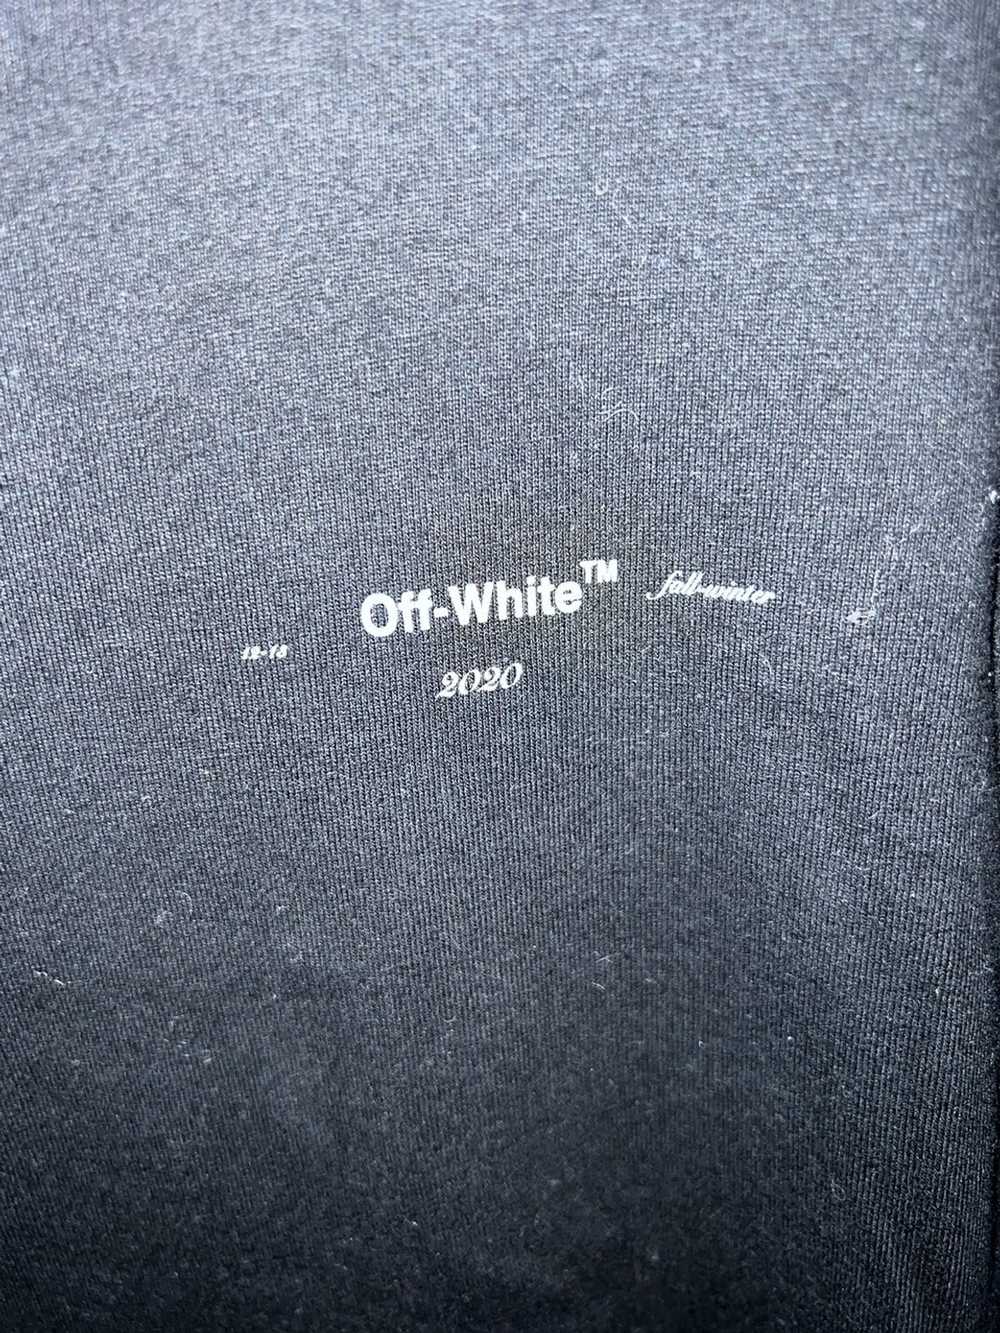 Off-White Off white 2020 t shirt - image 6